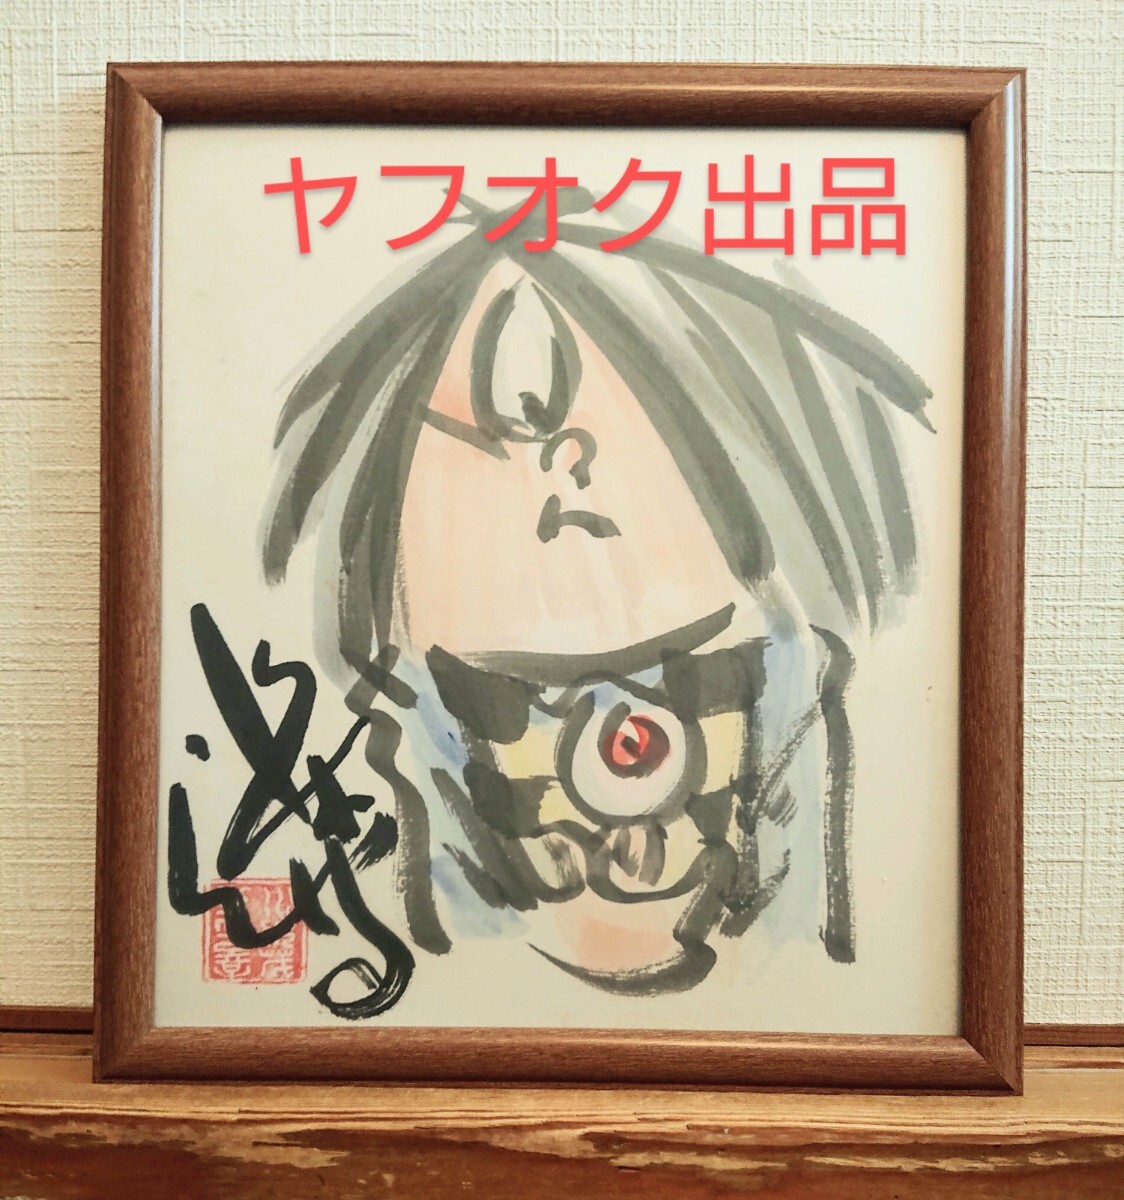 Shigeru Mizuki GeGeGe no Kitaro Sign Colored Paper Watercolor, comics, anime goods, sign, Hand-drawn painting